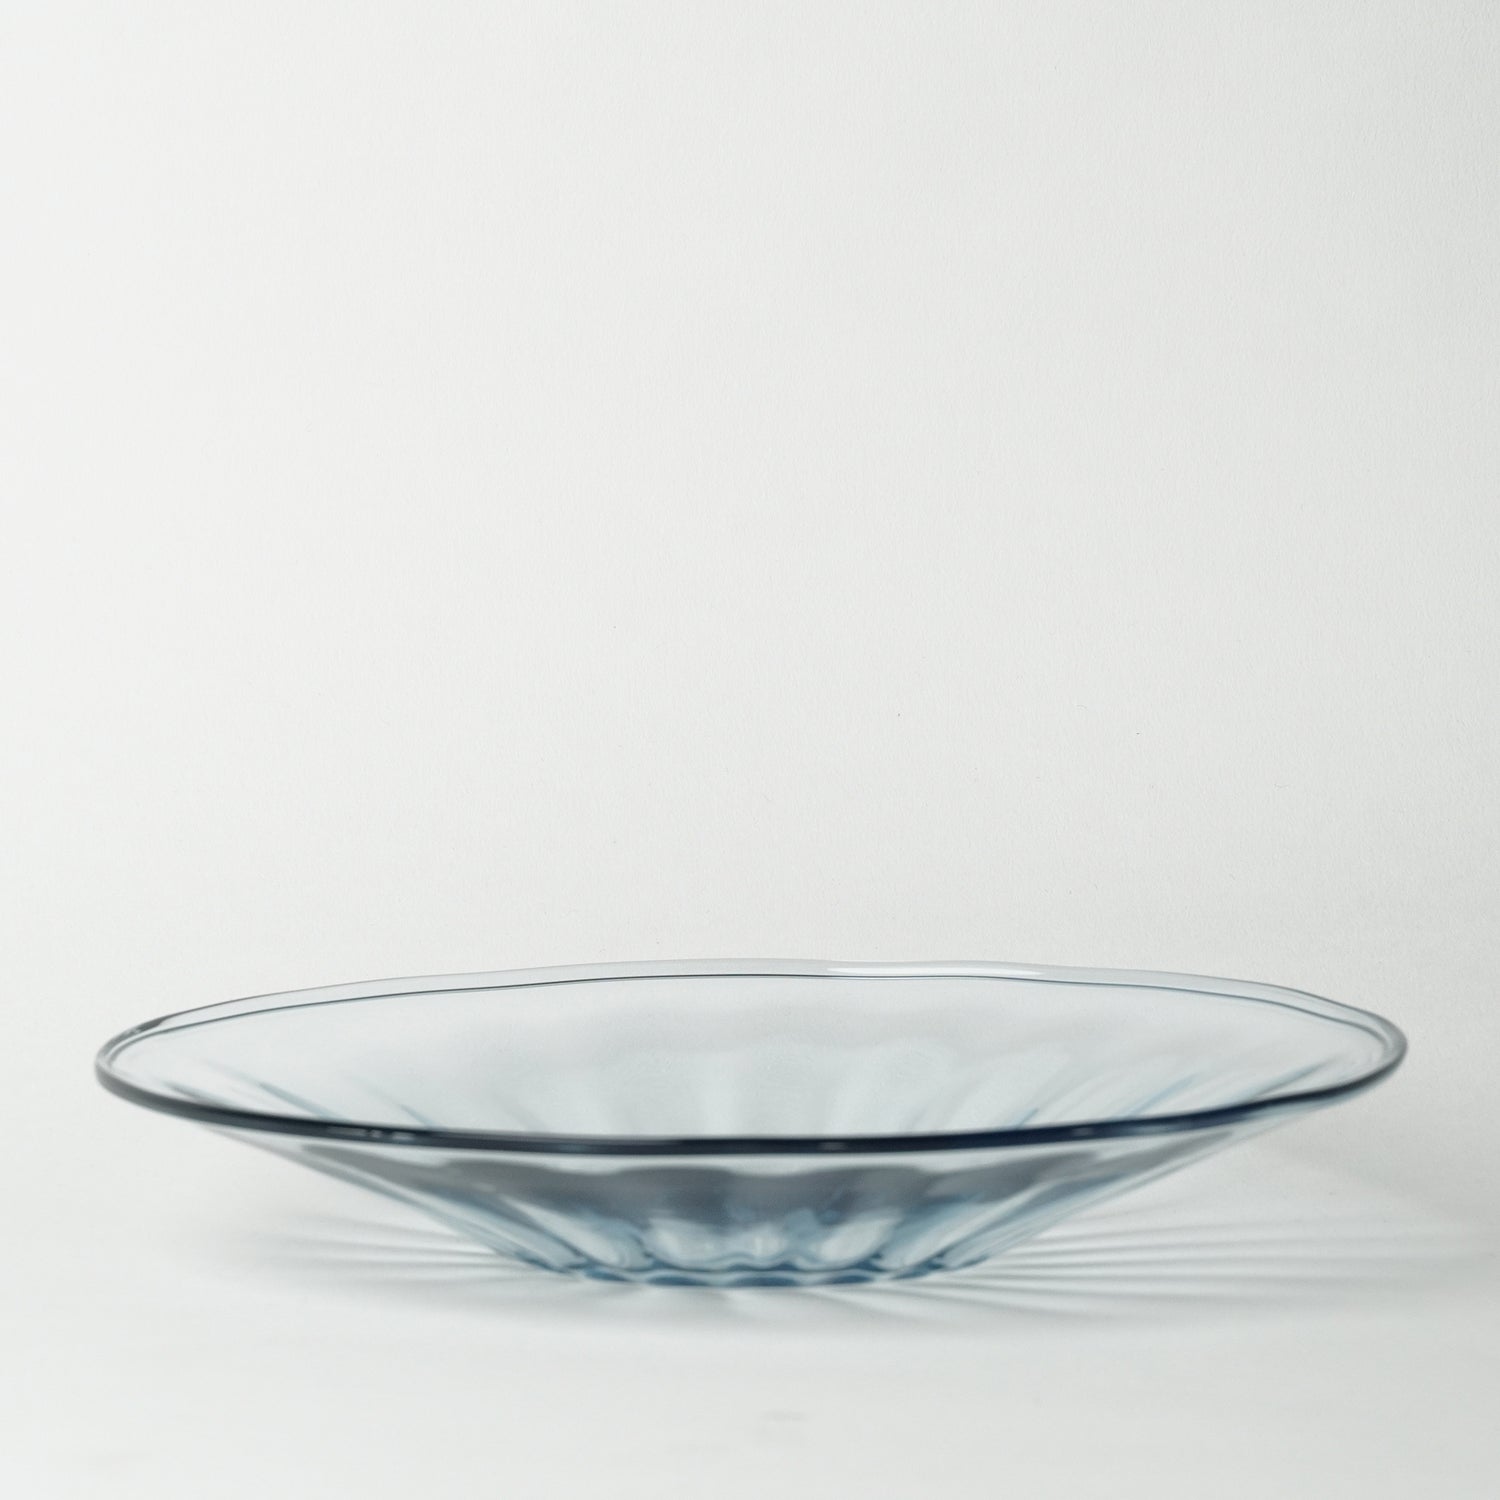 Hiroy Glass studio Hand-blown glass